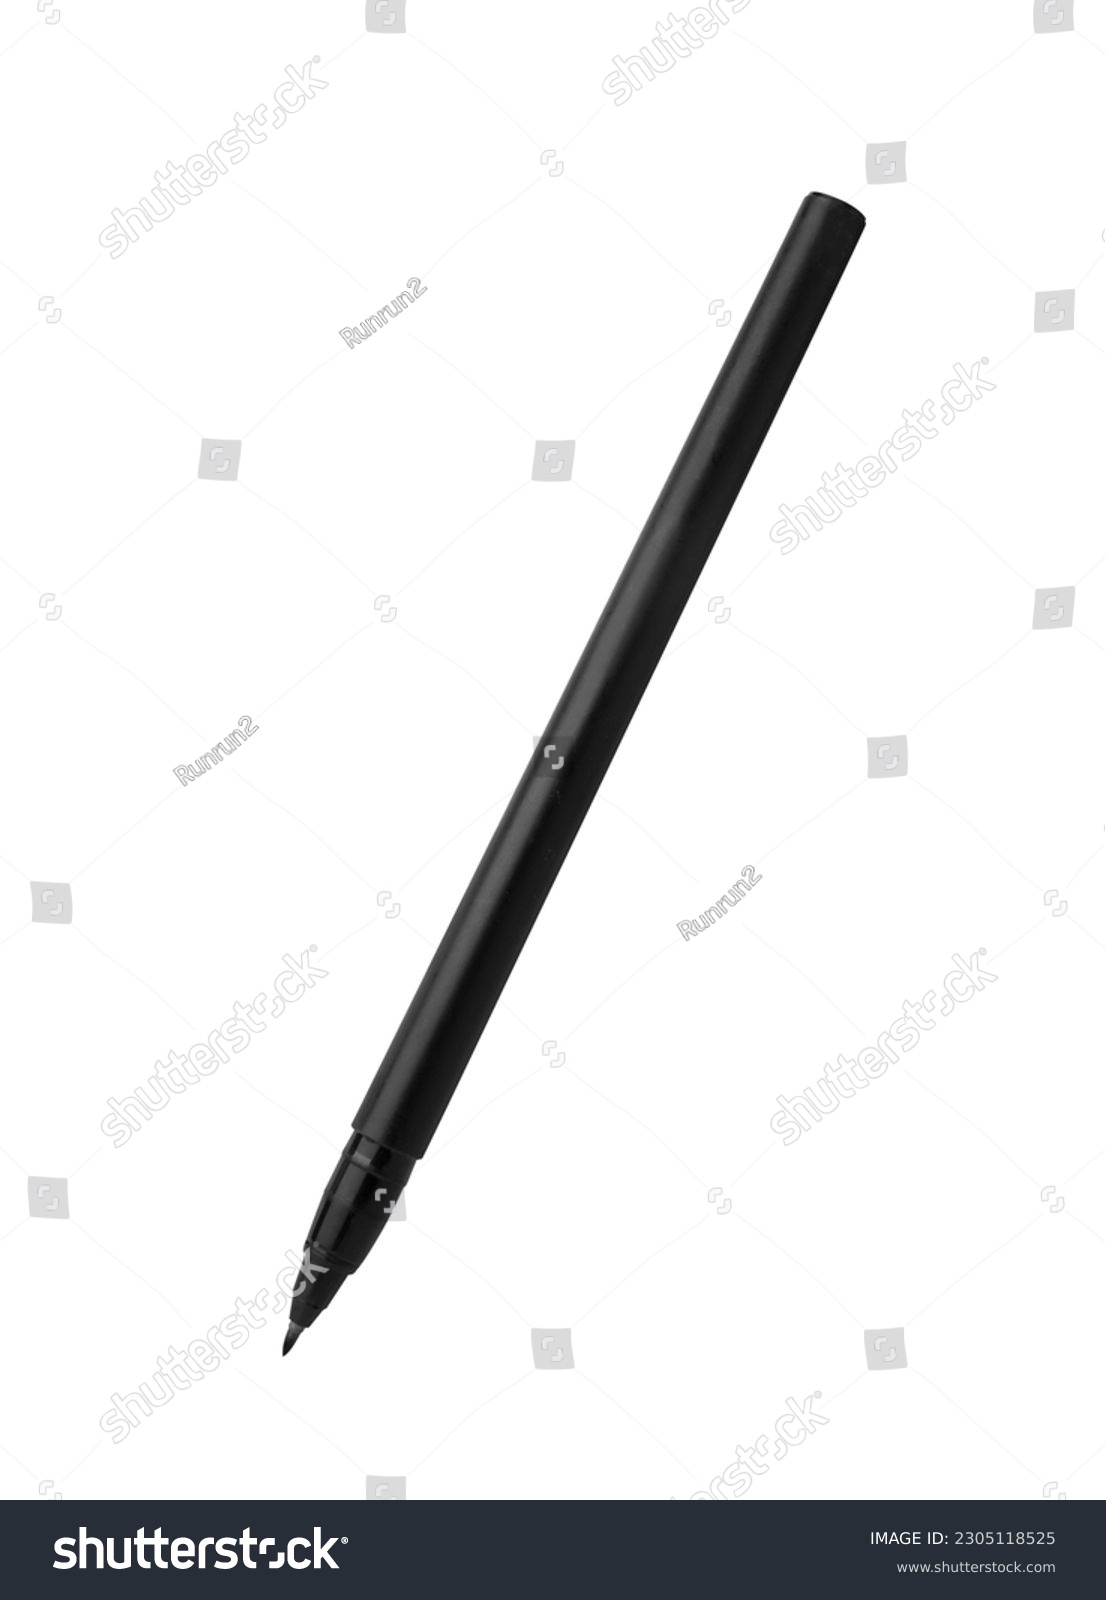 Hair brush pen isolated on white background #2305118525